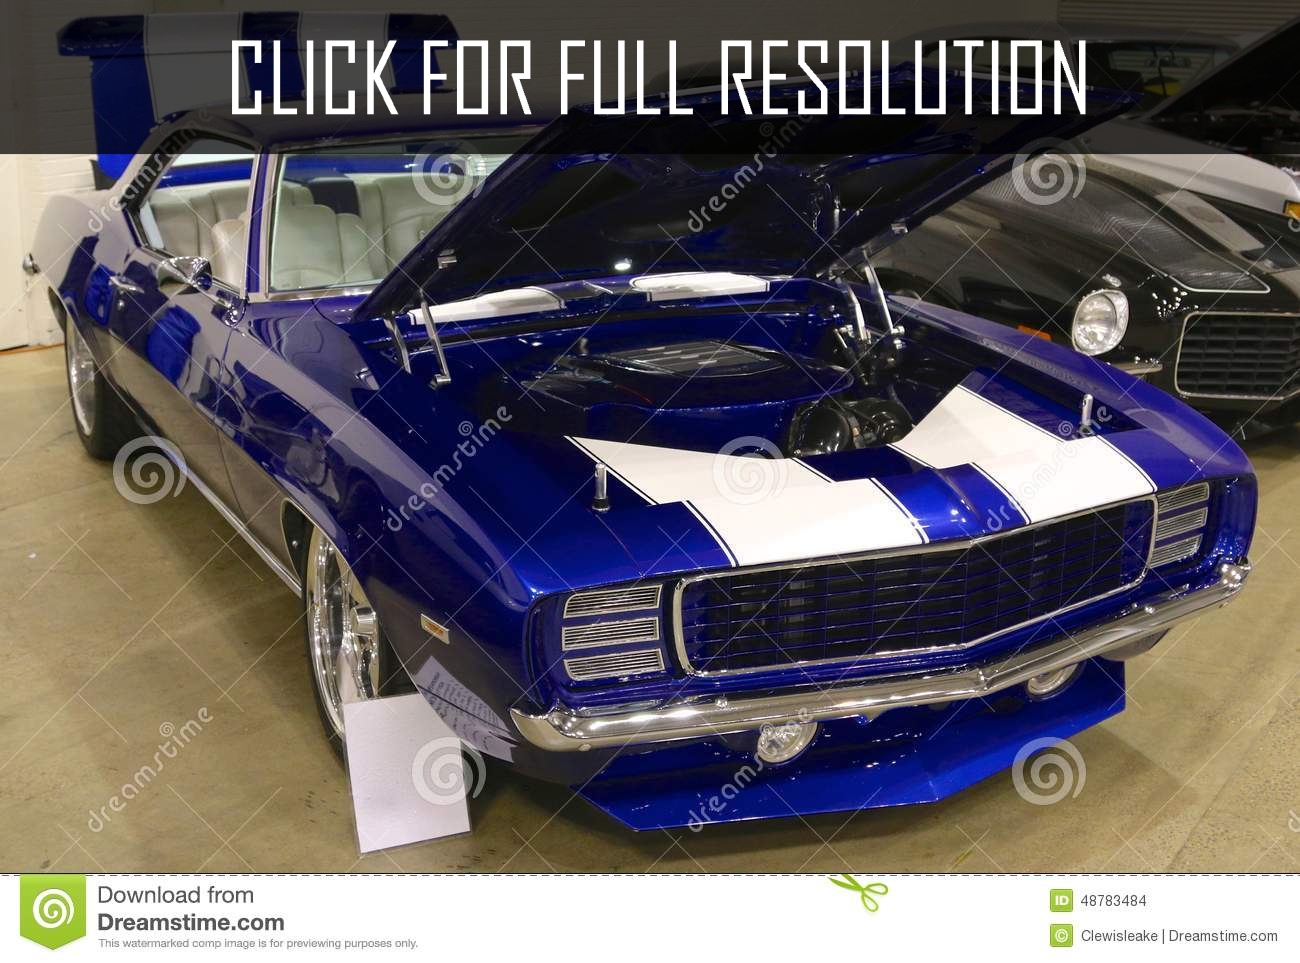 Chevrolet Royal